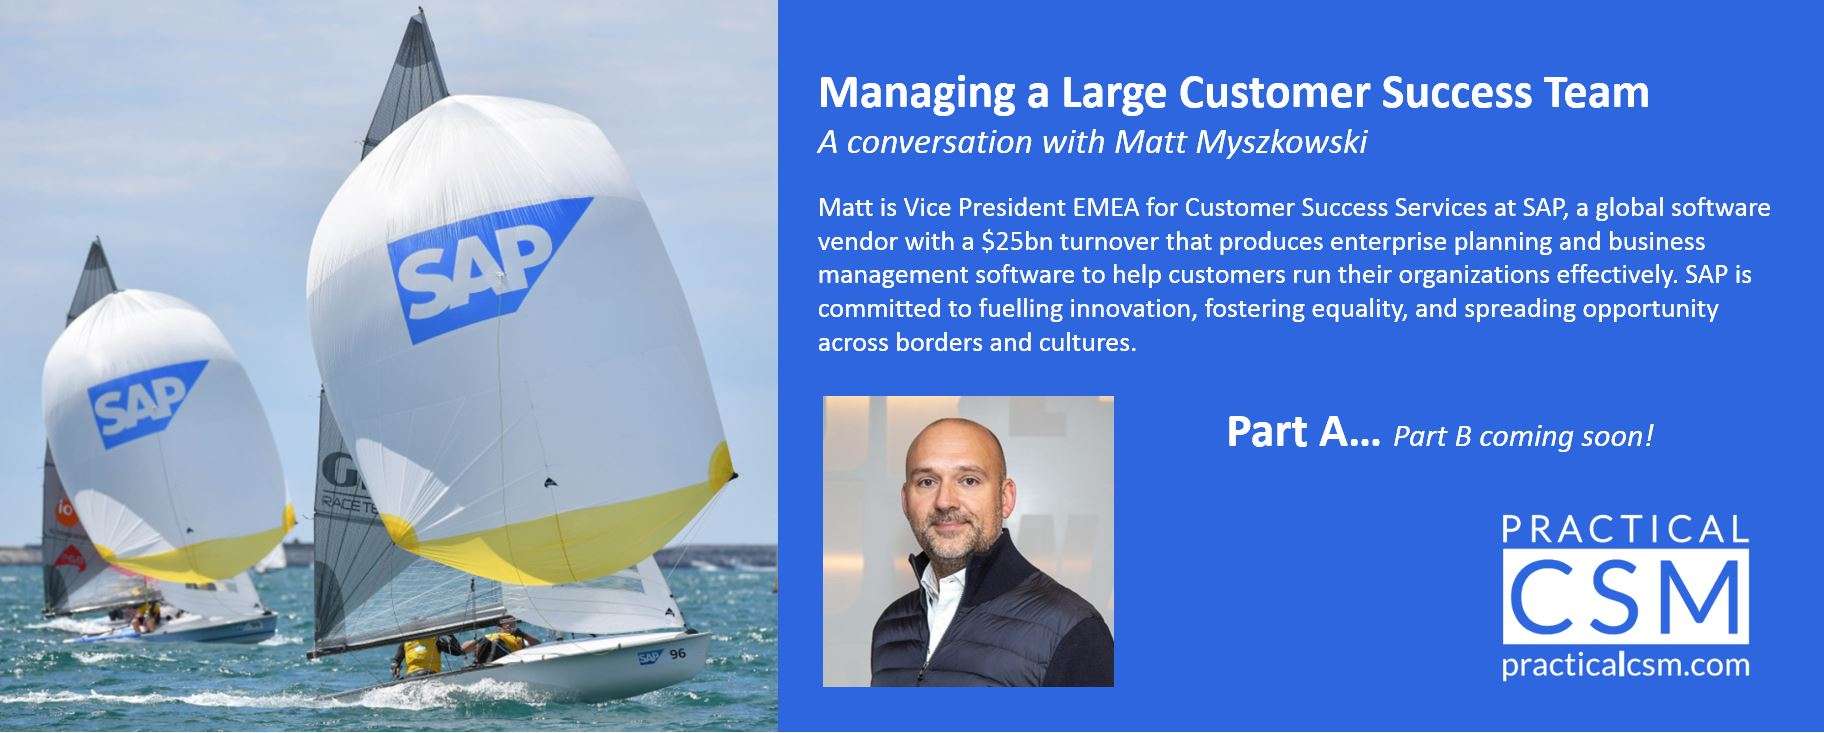 Managing a Large Customer Success Team with Matt Myszkowski part A - Practical CSM